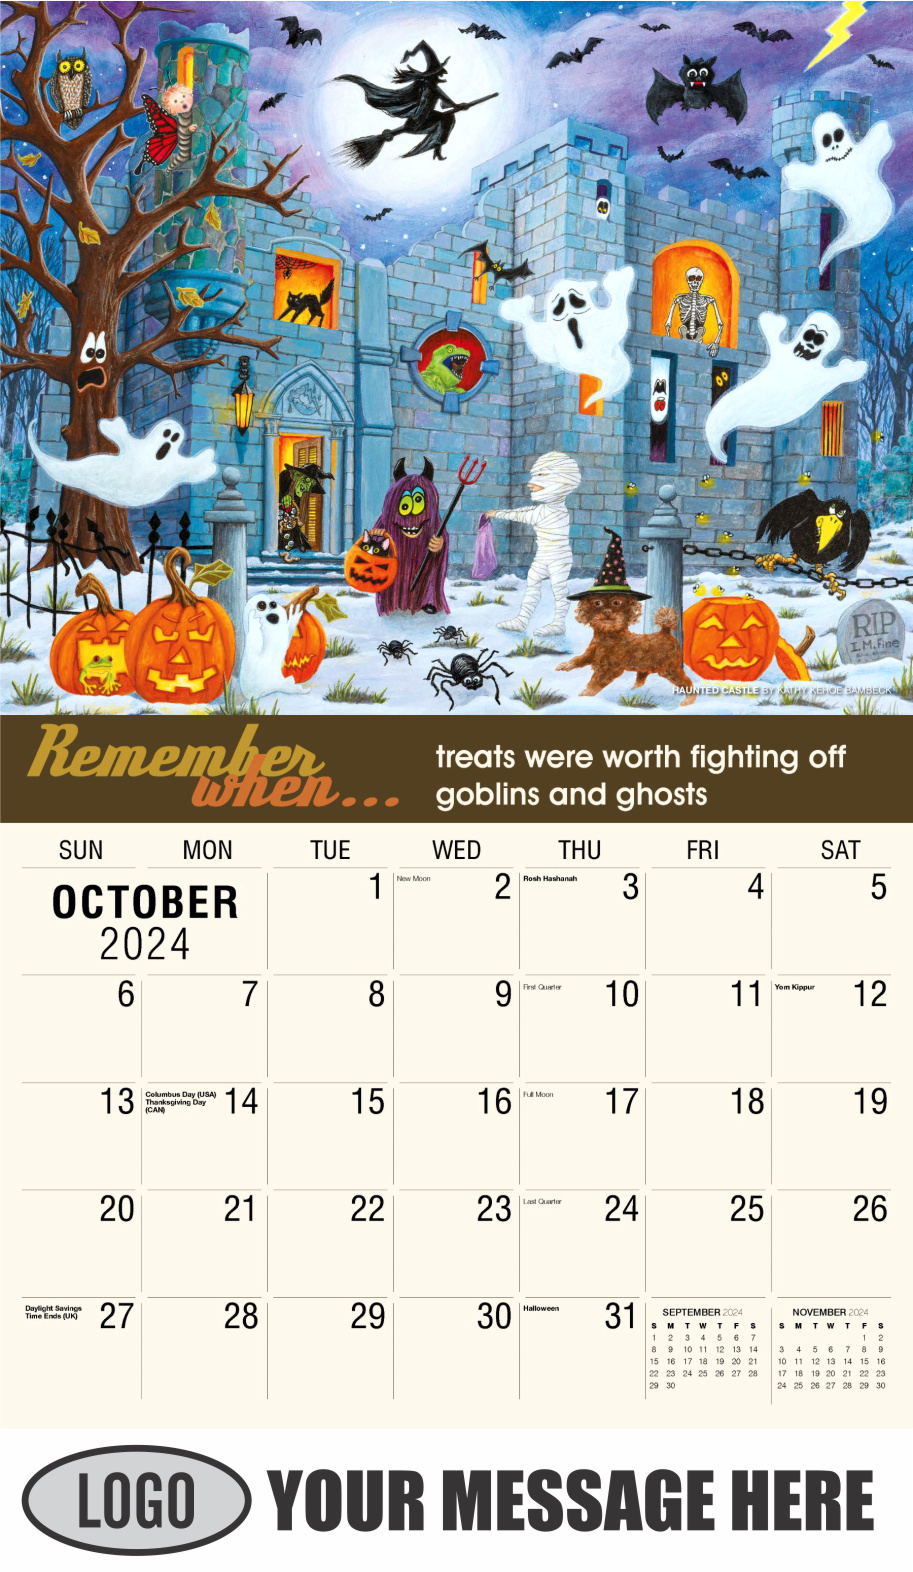 Remember When 2024 Business Advertising Calendar - October